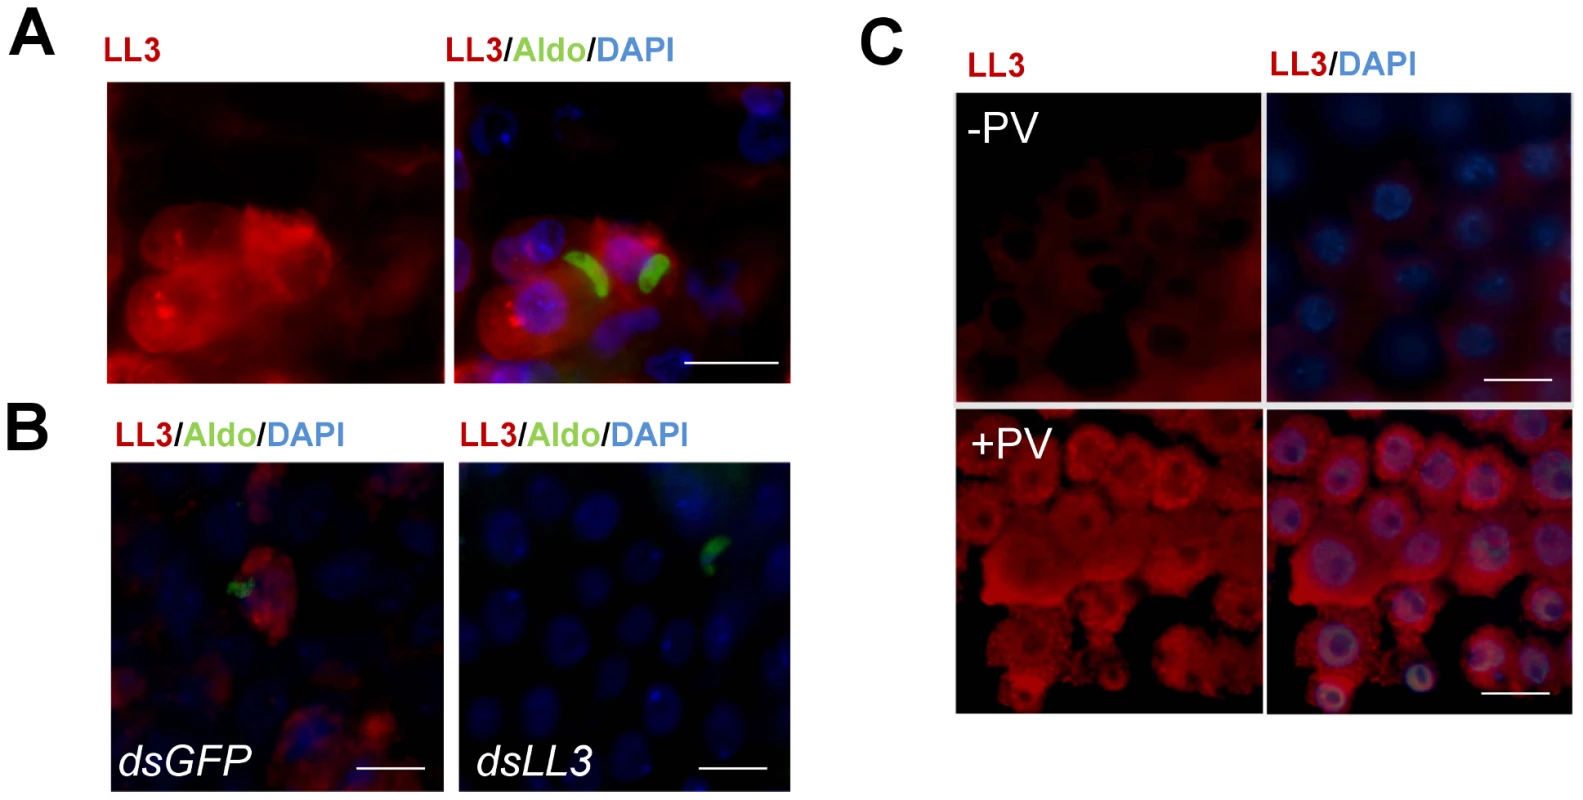 Immunofluorescence localization of LL3 in the mosquito midgut.